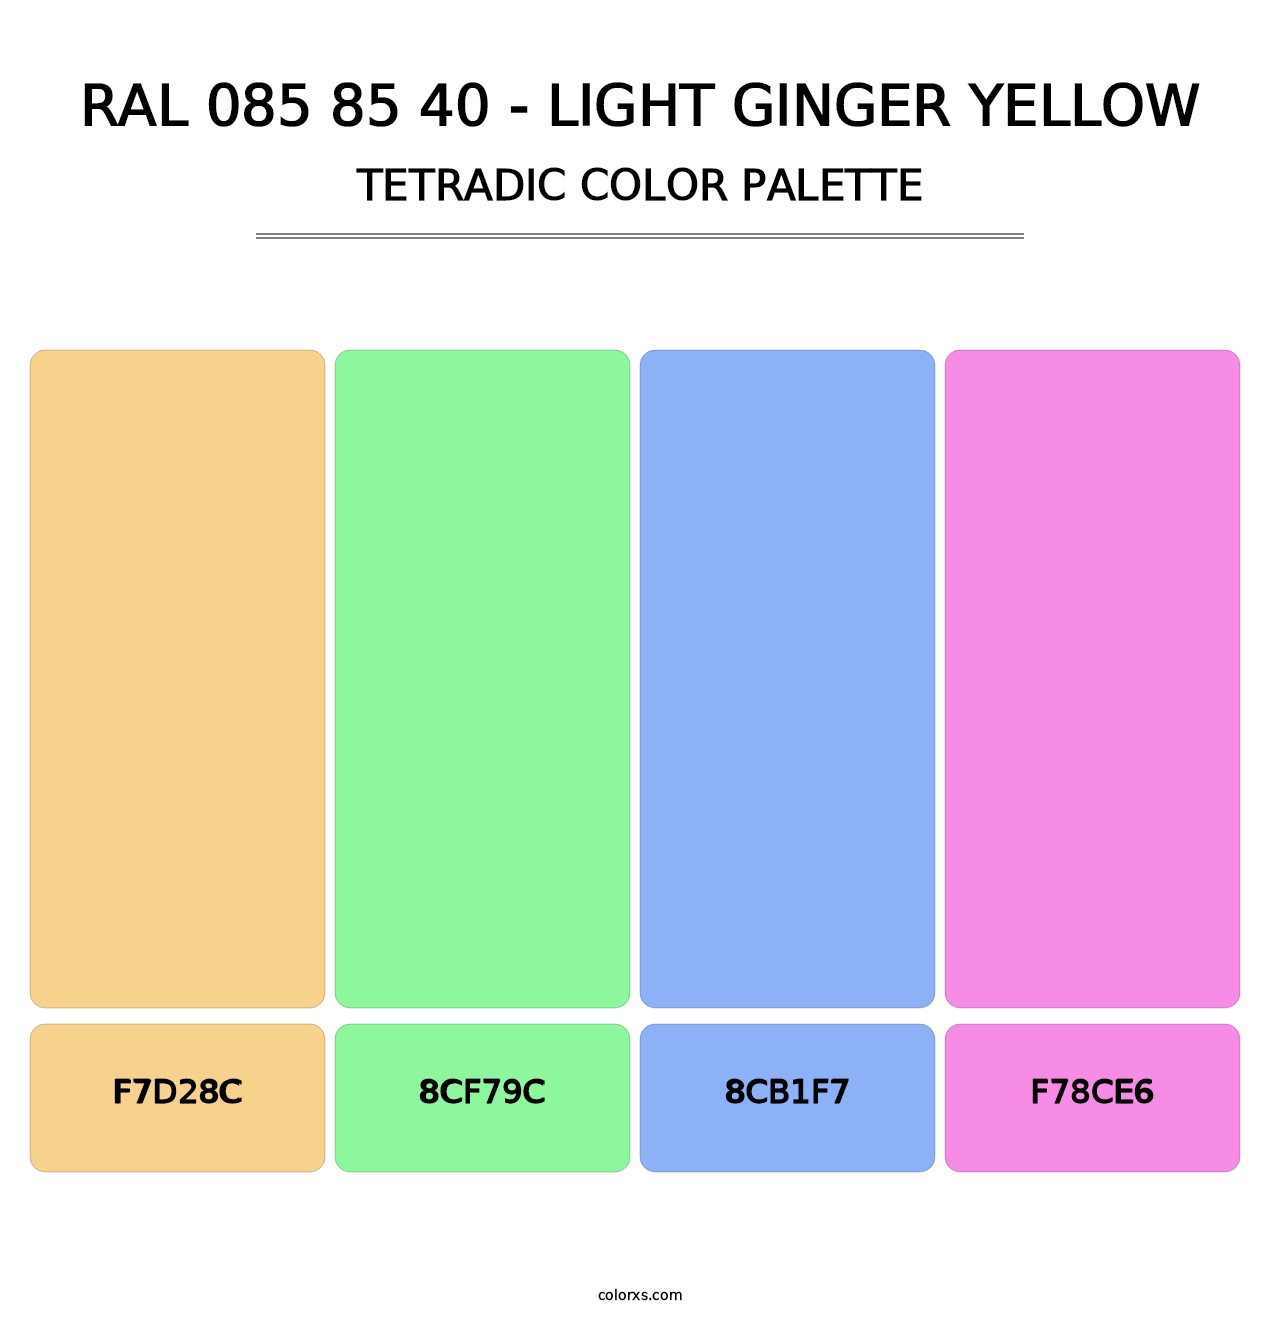 RAL 085 85 40 - Light Ginger Yellow - Tetradic Color Palette